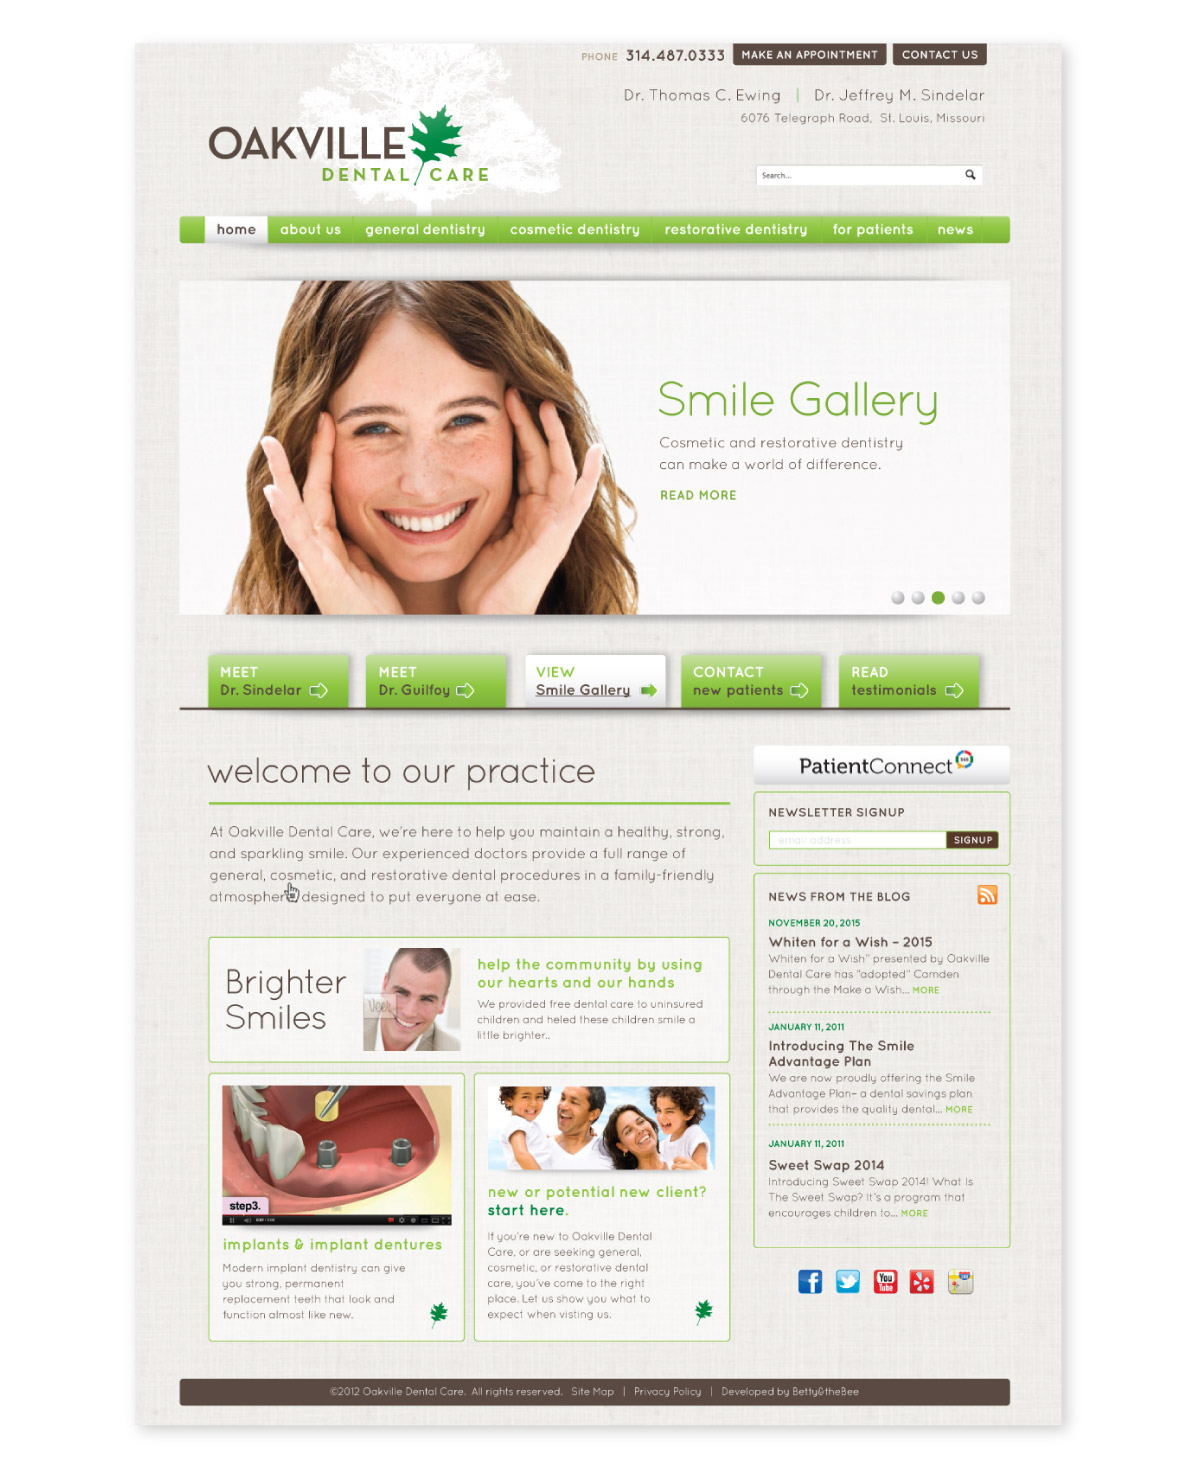 Oakville website landing page